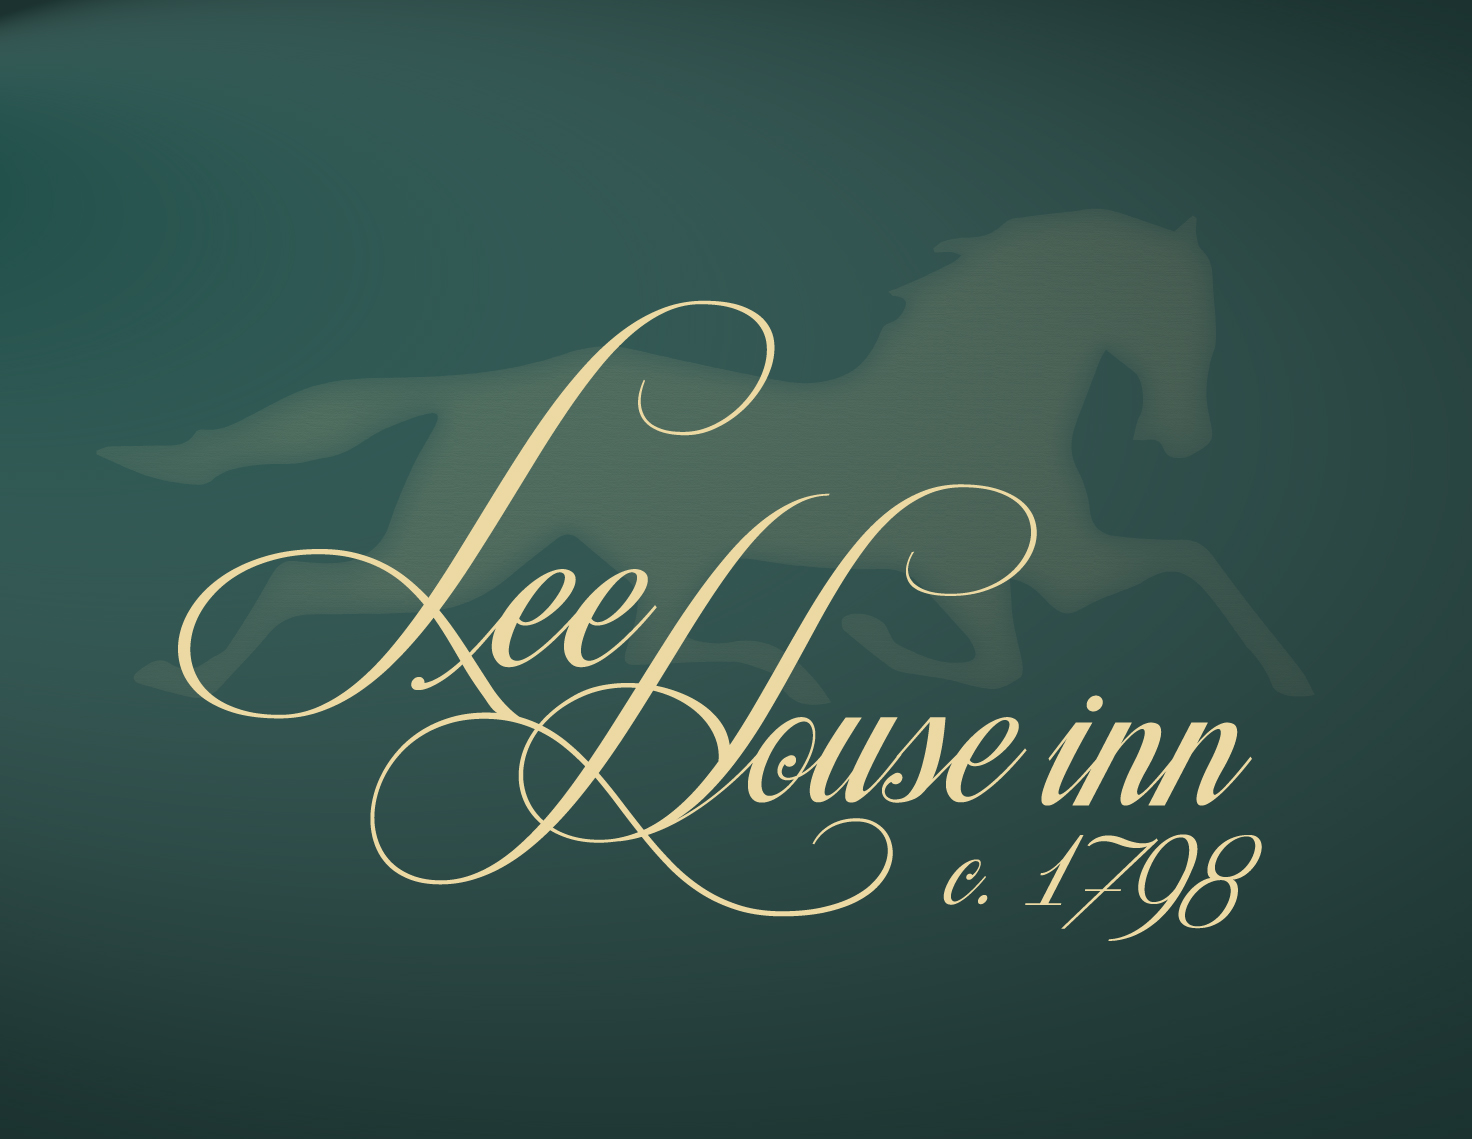 Lee House inn final logo